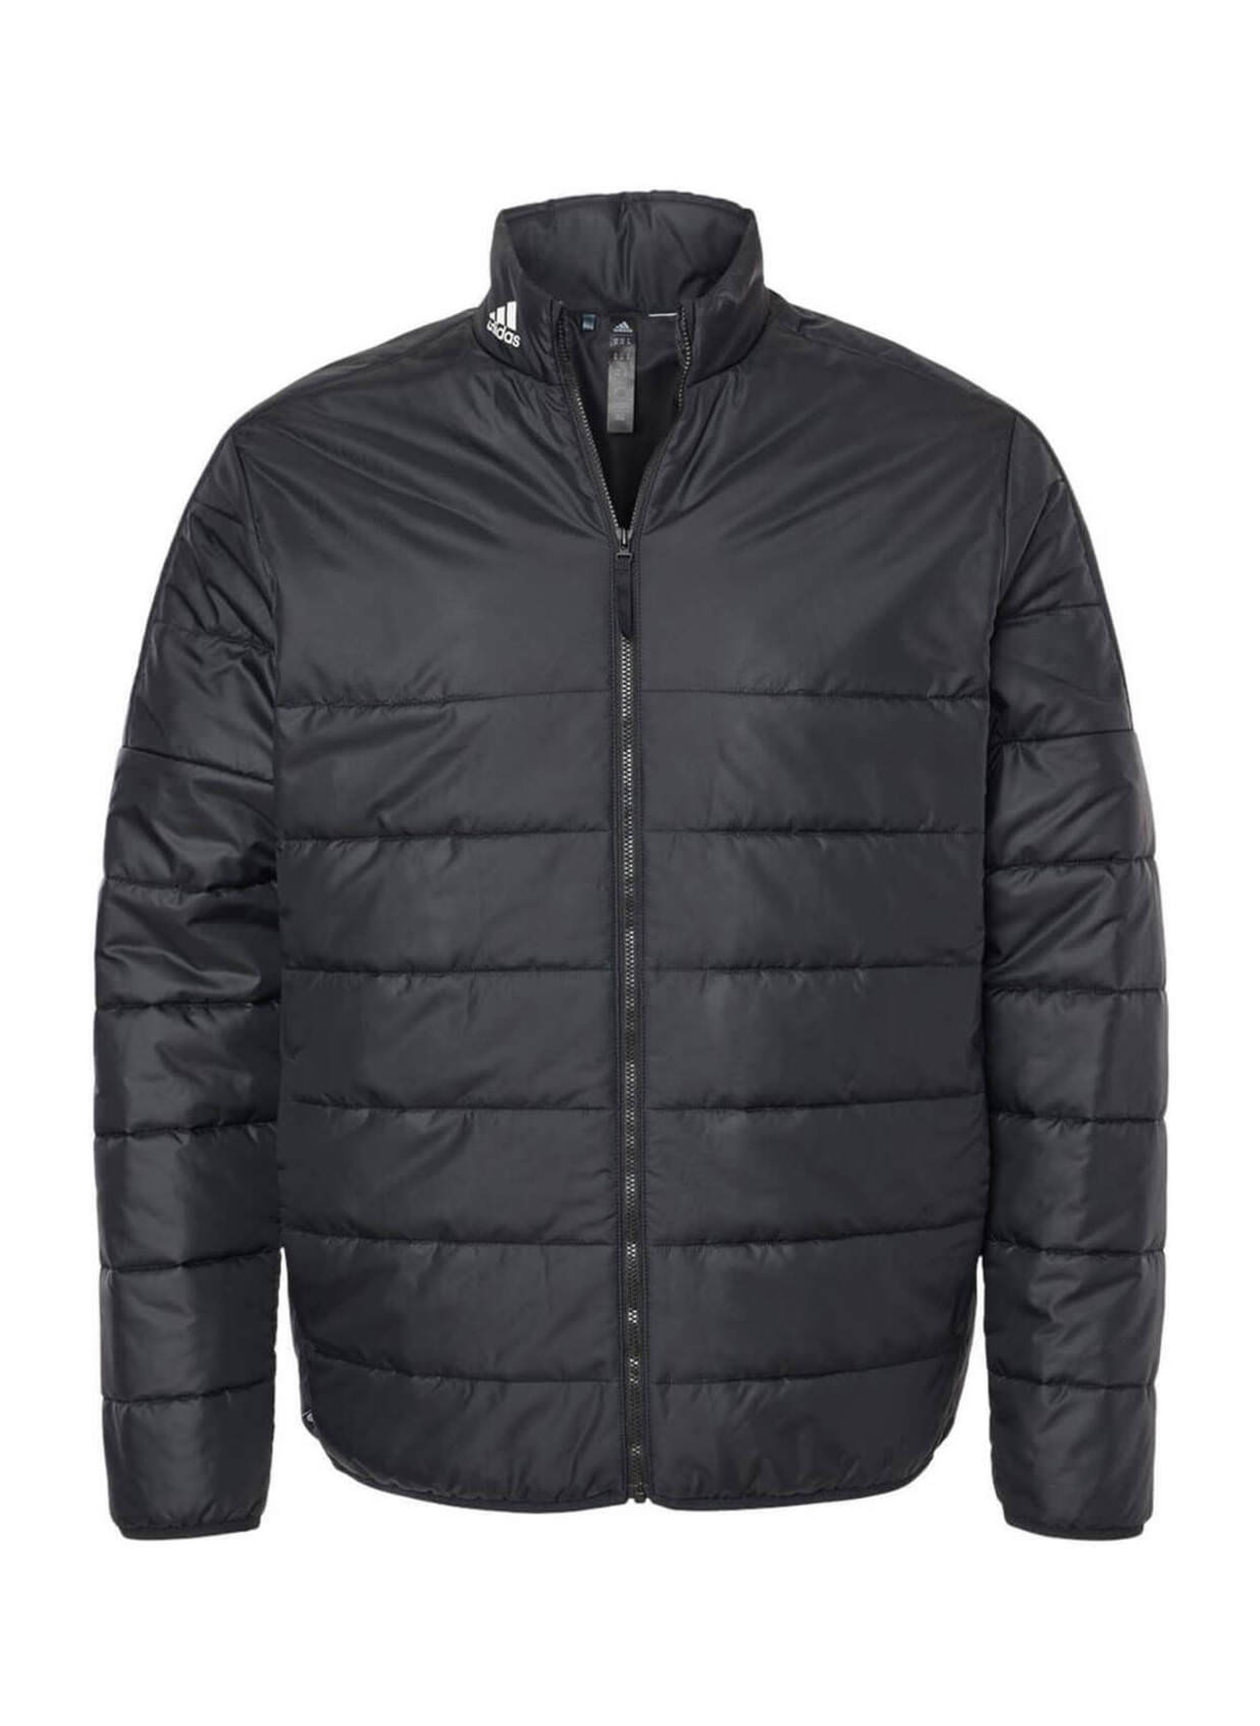 Corporate Adidas Men's Black Puffer Jacket | Custom Jackets